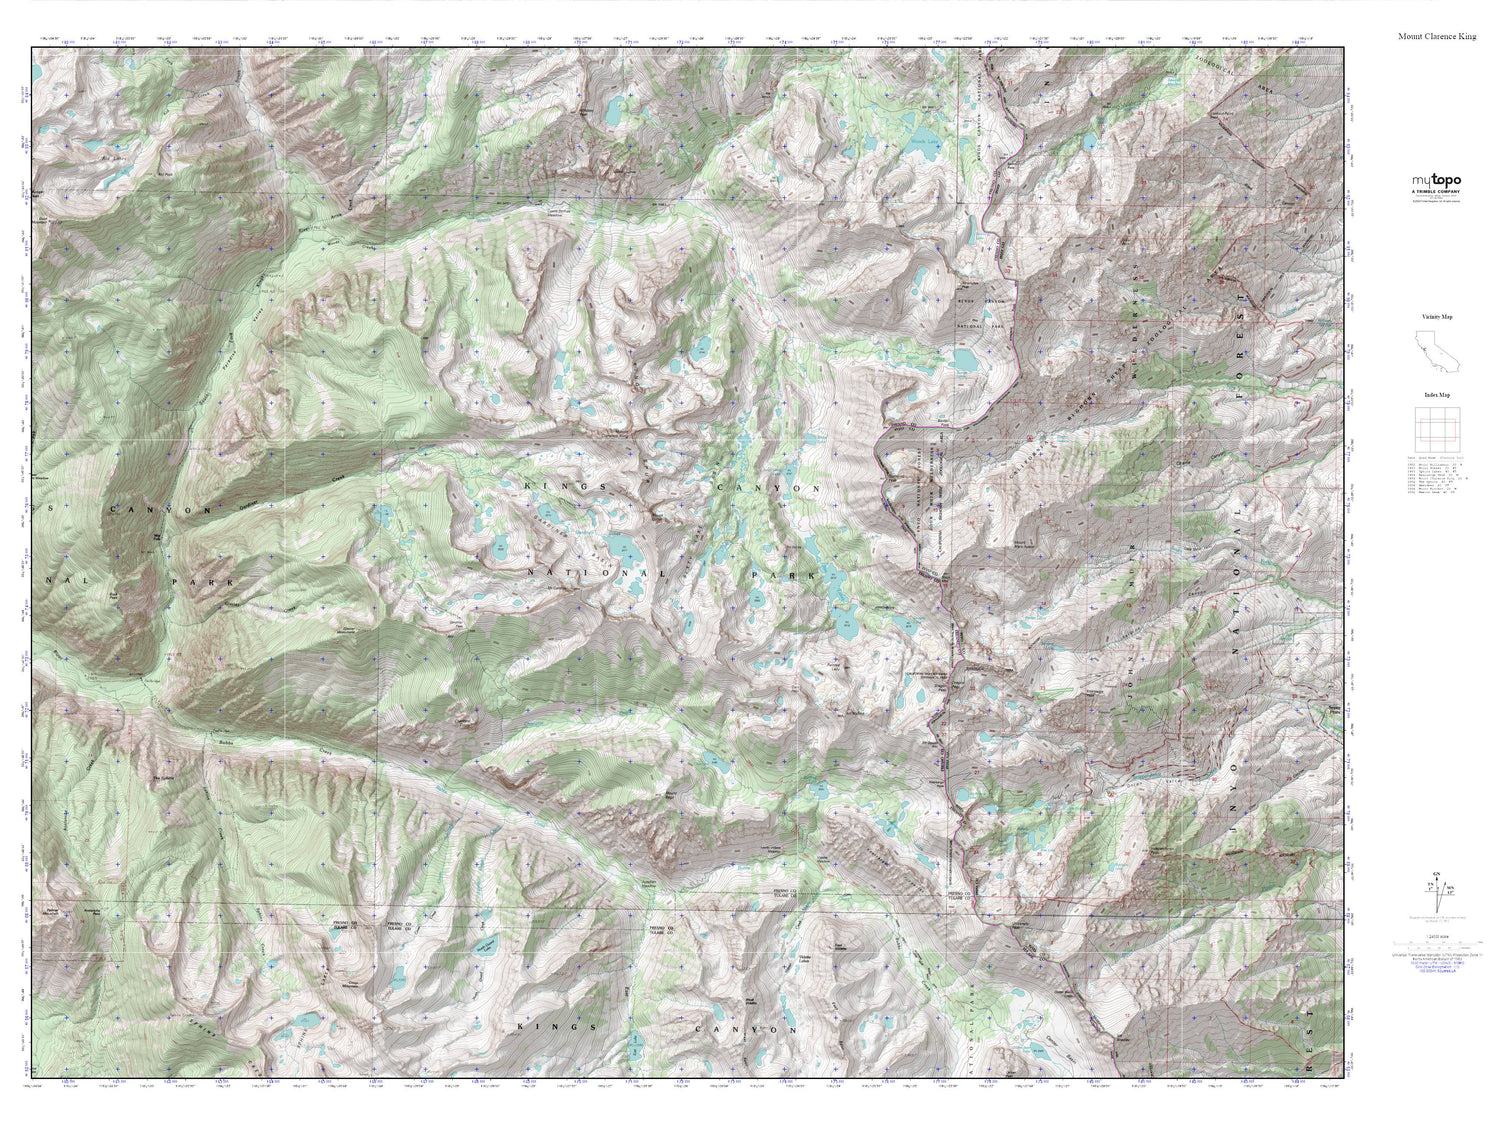 Mount Clarence King MyTopo Explorer Series Map Image